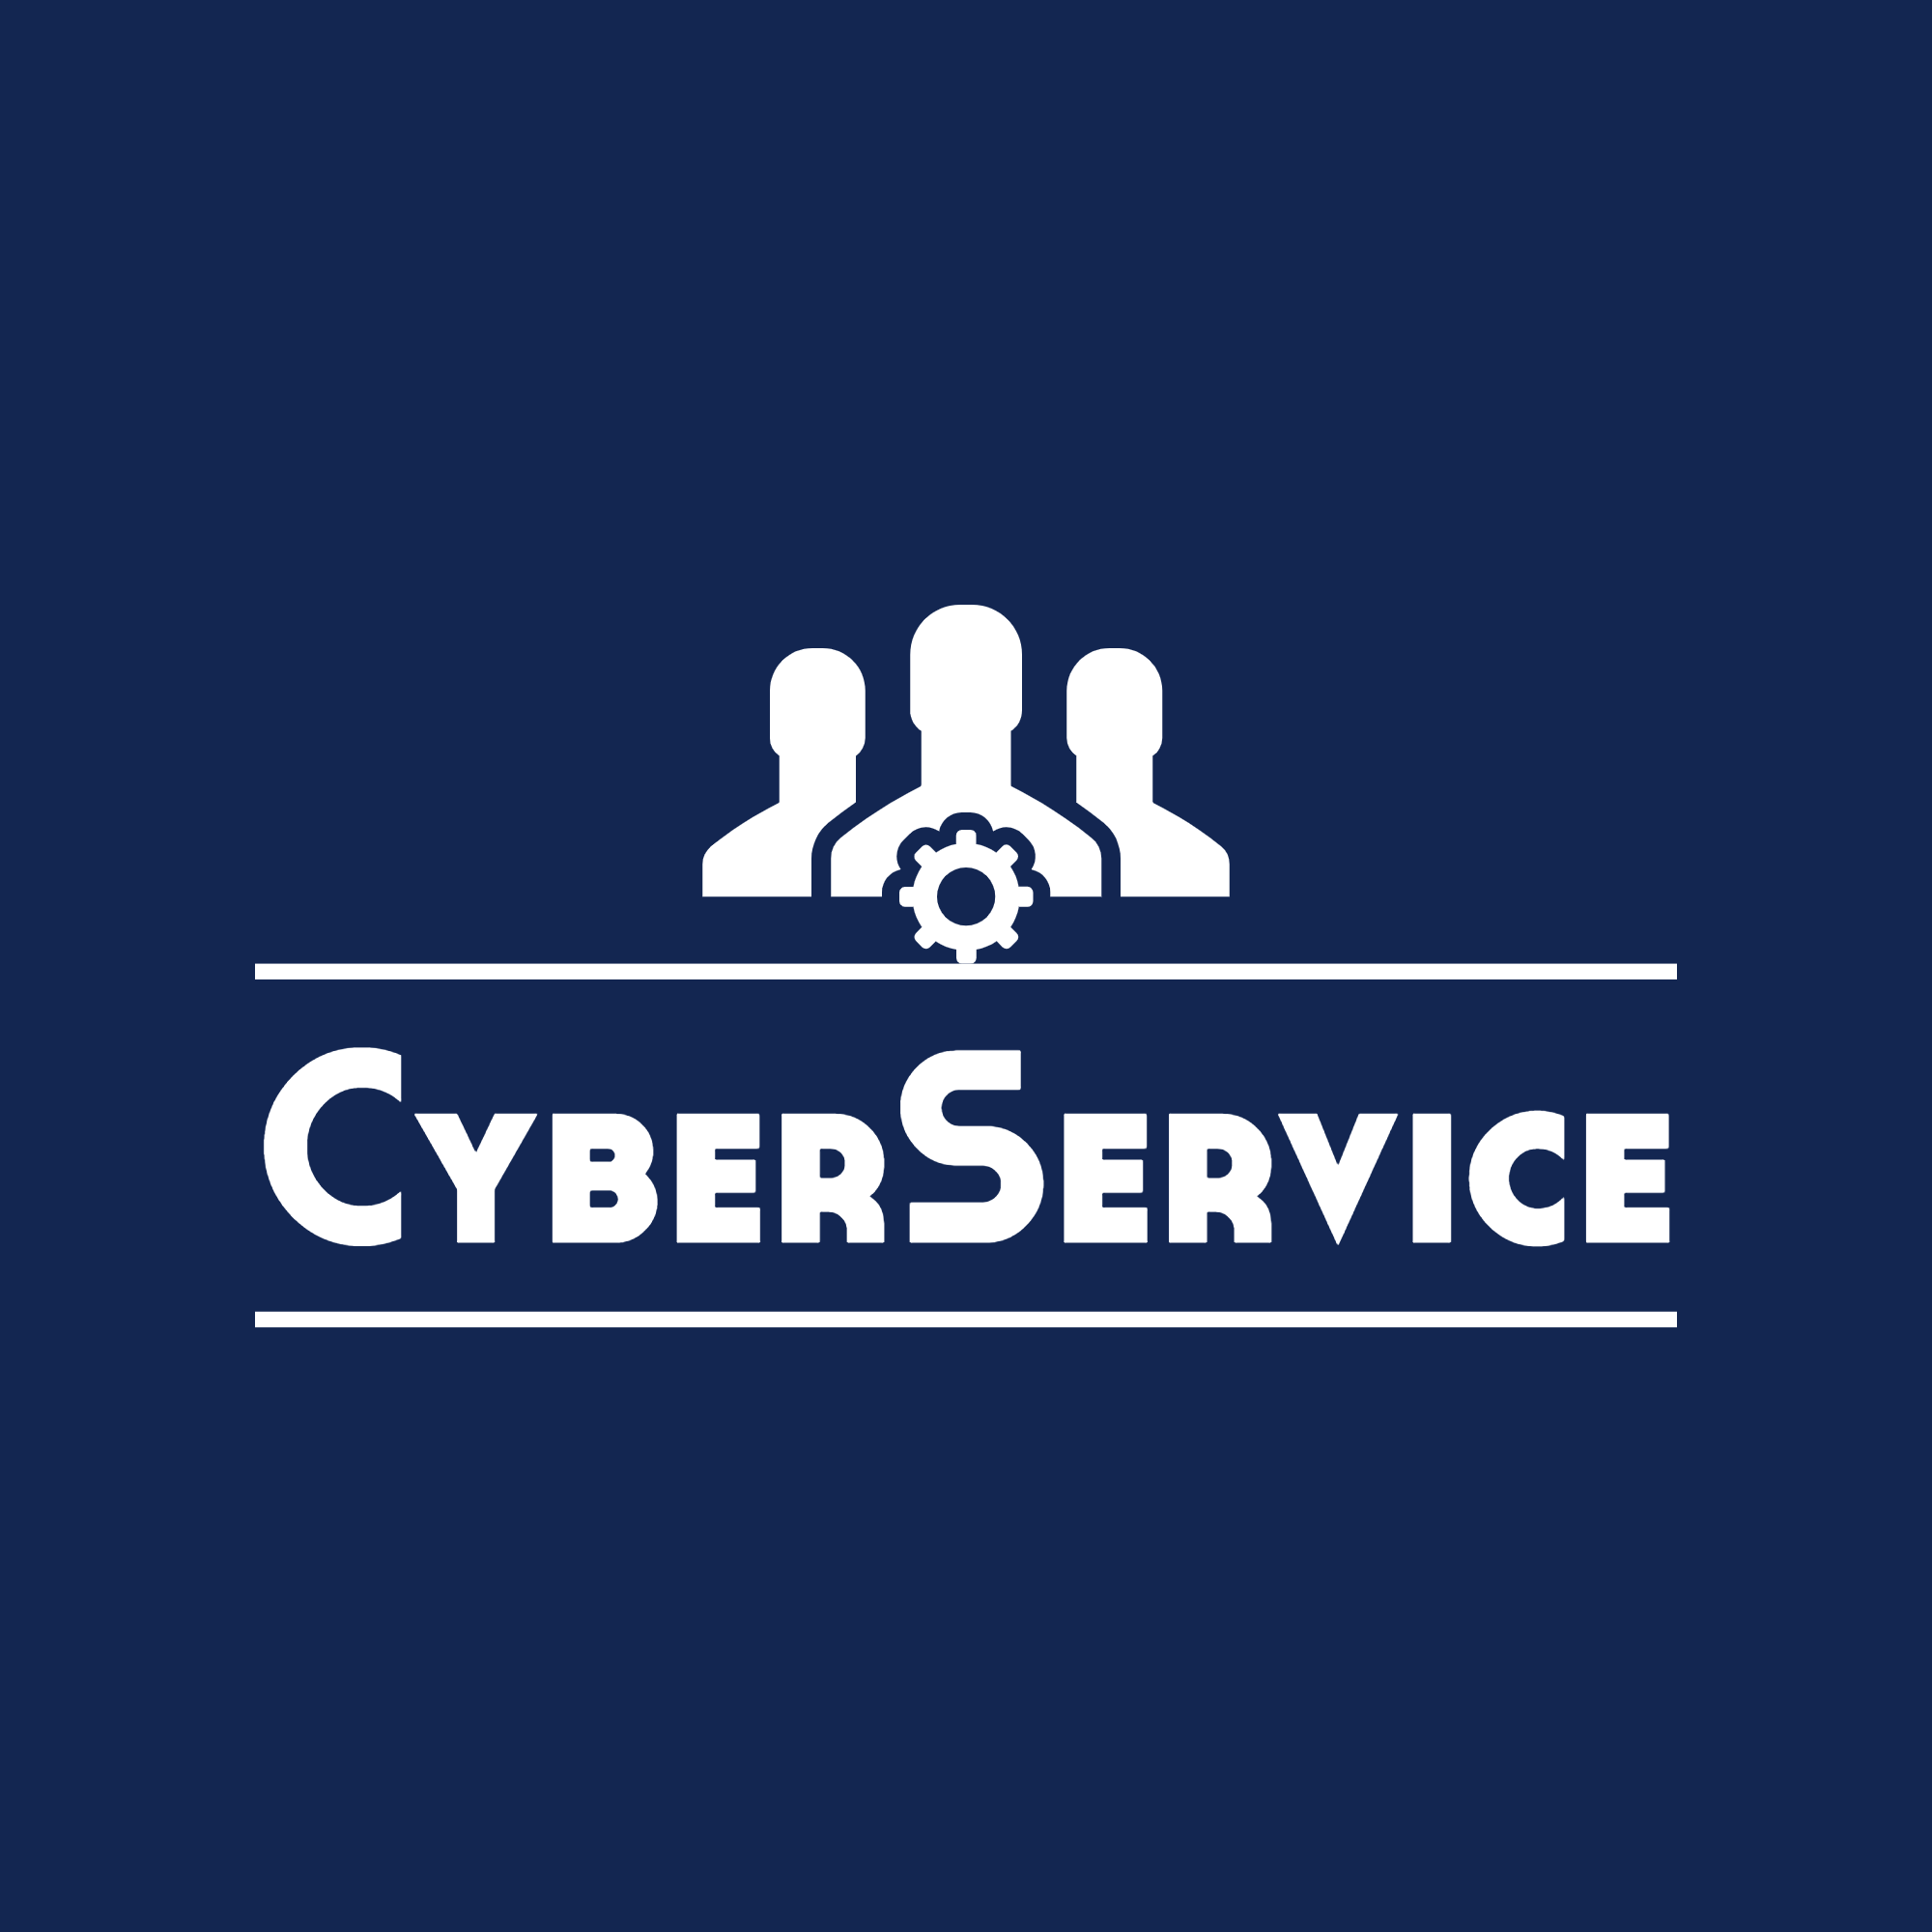 "CyberService"